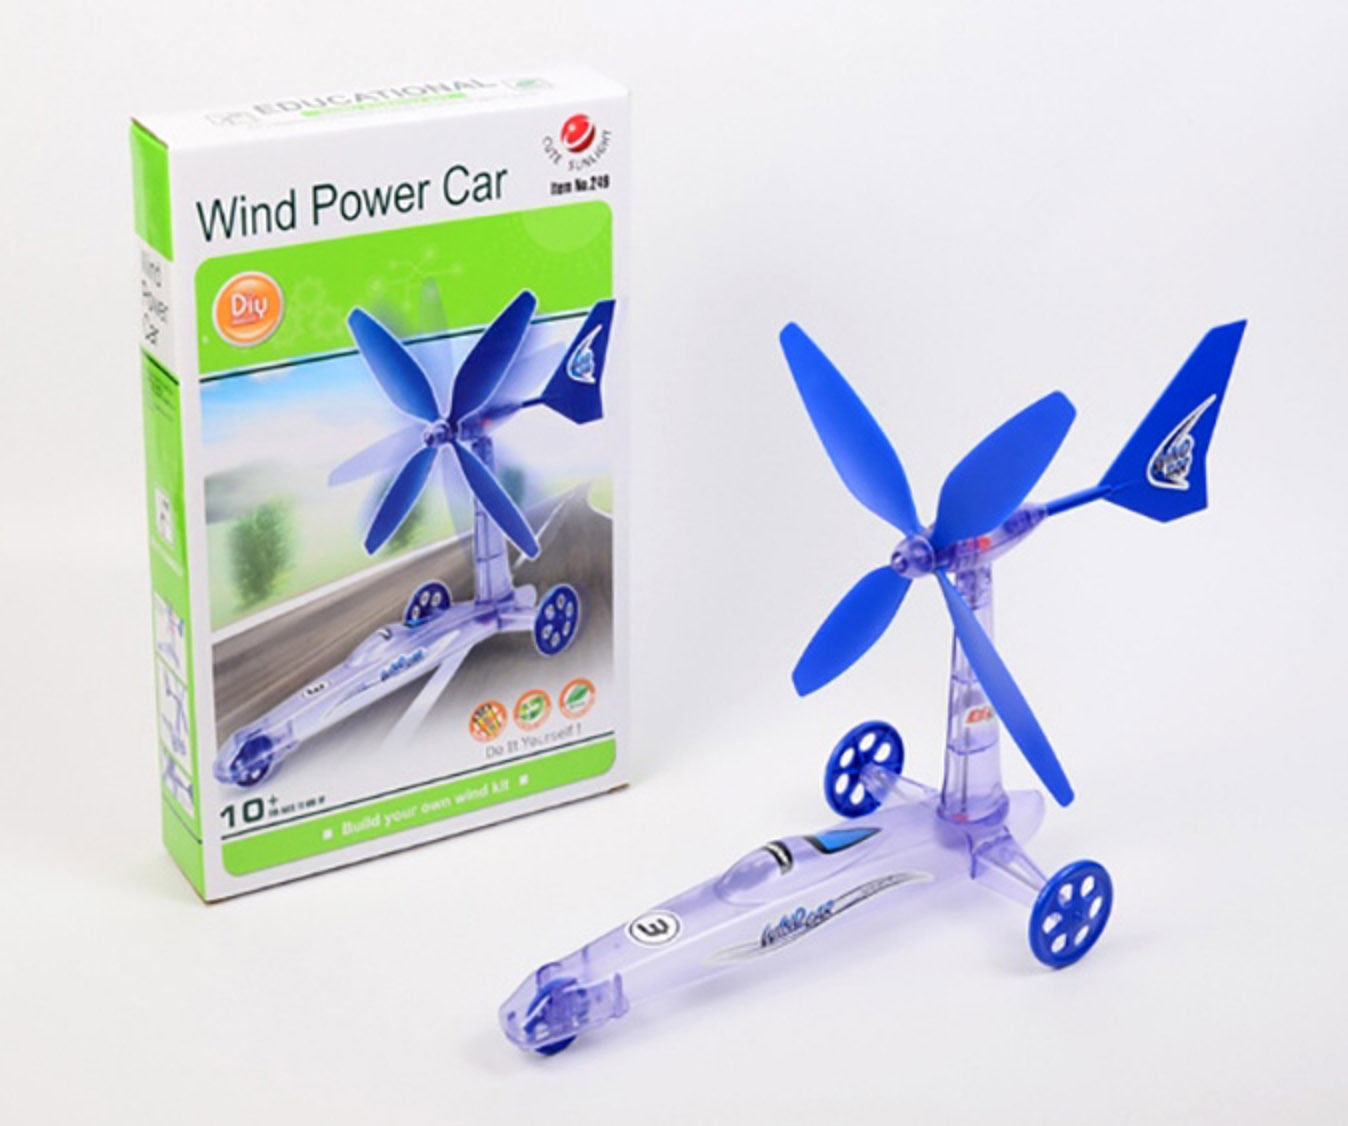 Wind Powered Car DIY Educational Toy Kit